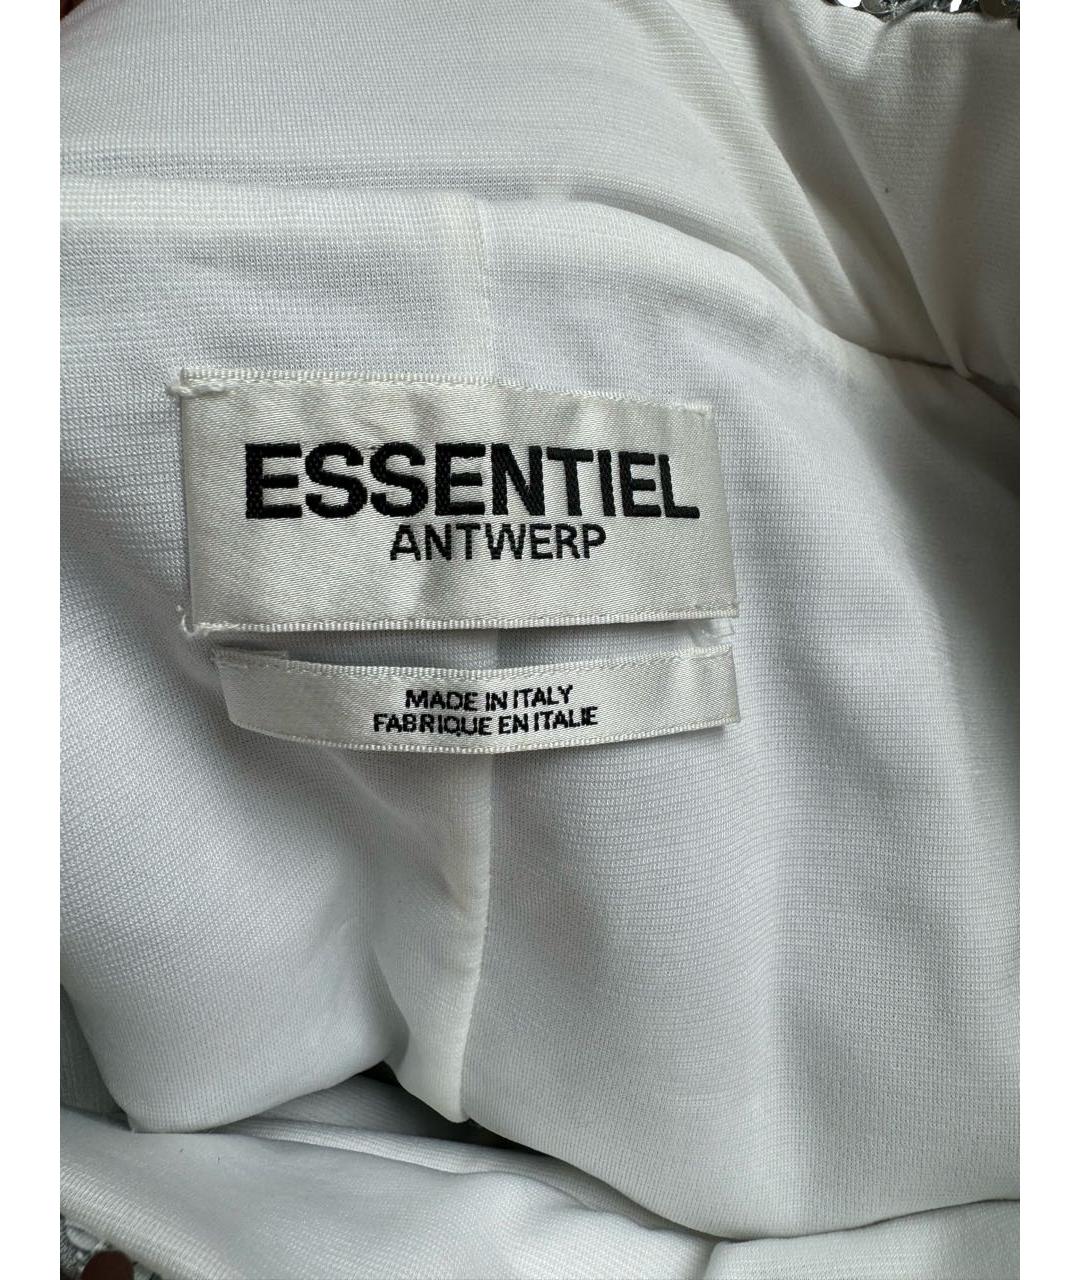 ESSENTIEL ANTWERP Серебряная полиэстеровая юбка миди, фото 4